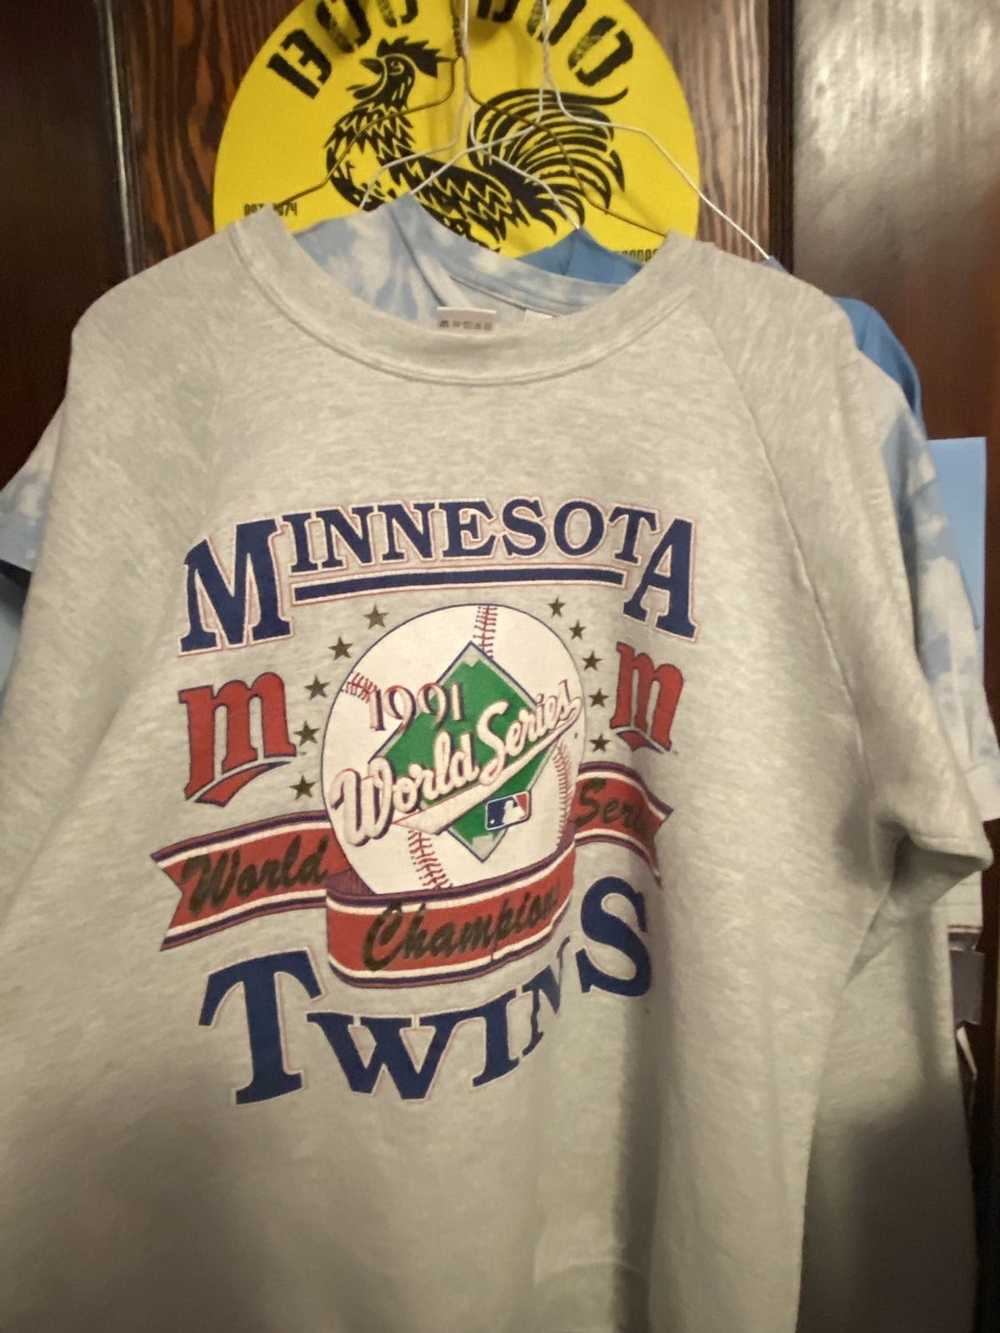 Vintage 80s White MLB Minnesota Twins 1987 Champions Single Stitch